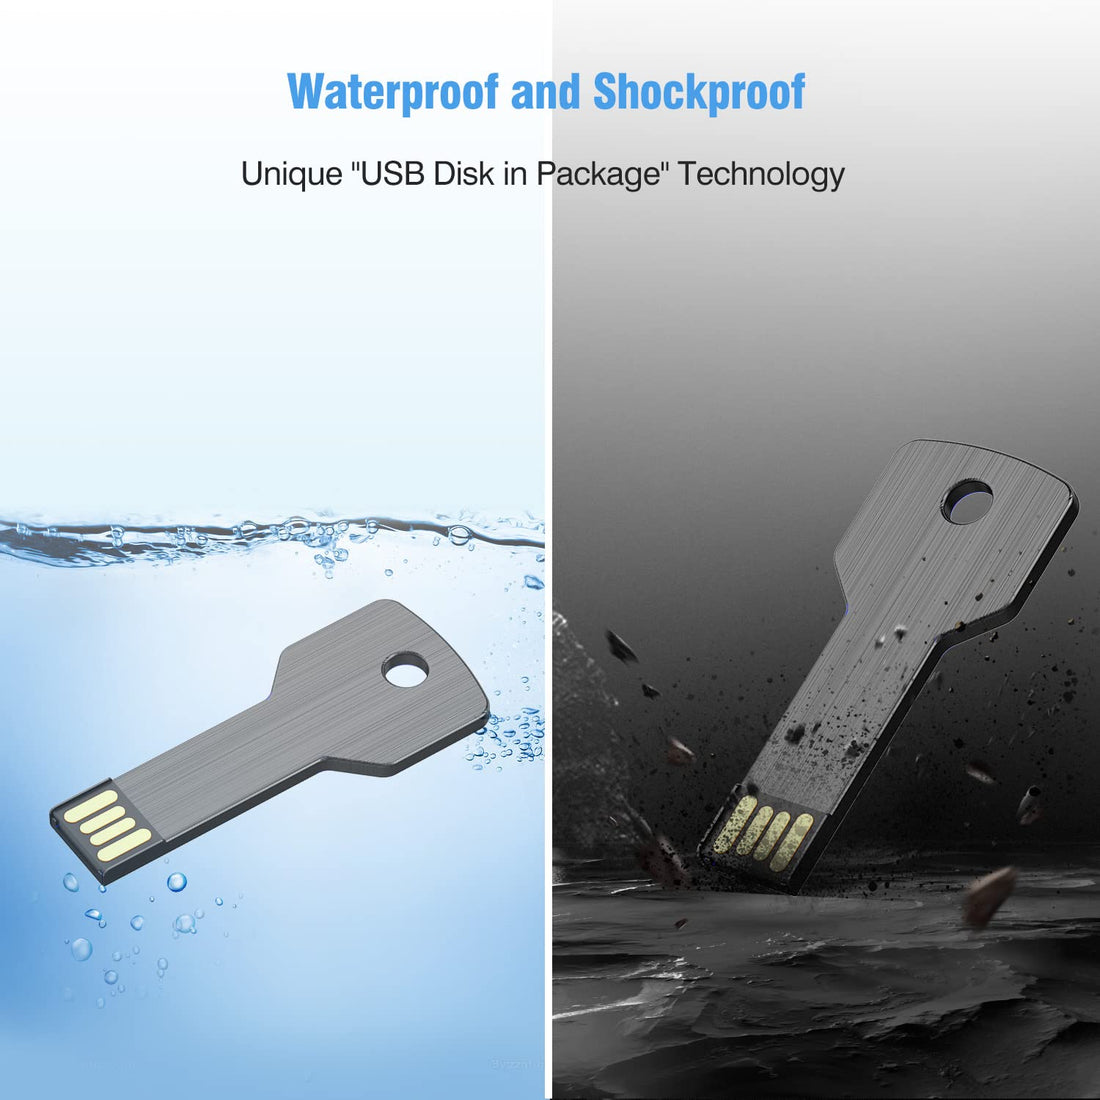 KOOTION 32GB USB Flash Drive, Metal Key Shaped 2.0 USB Memory Stick Pen Drive Black